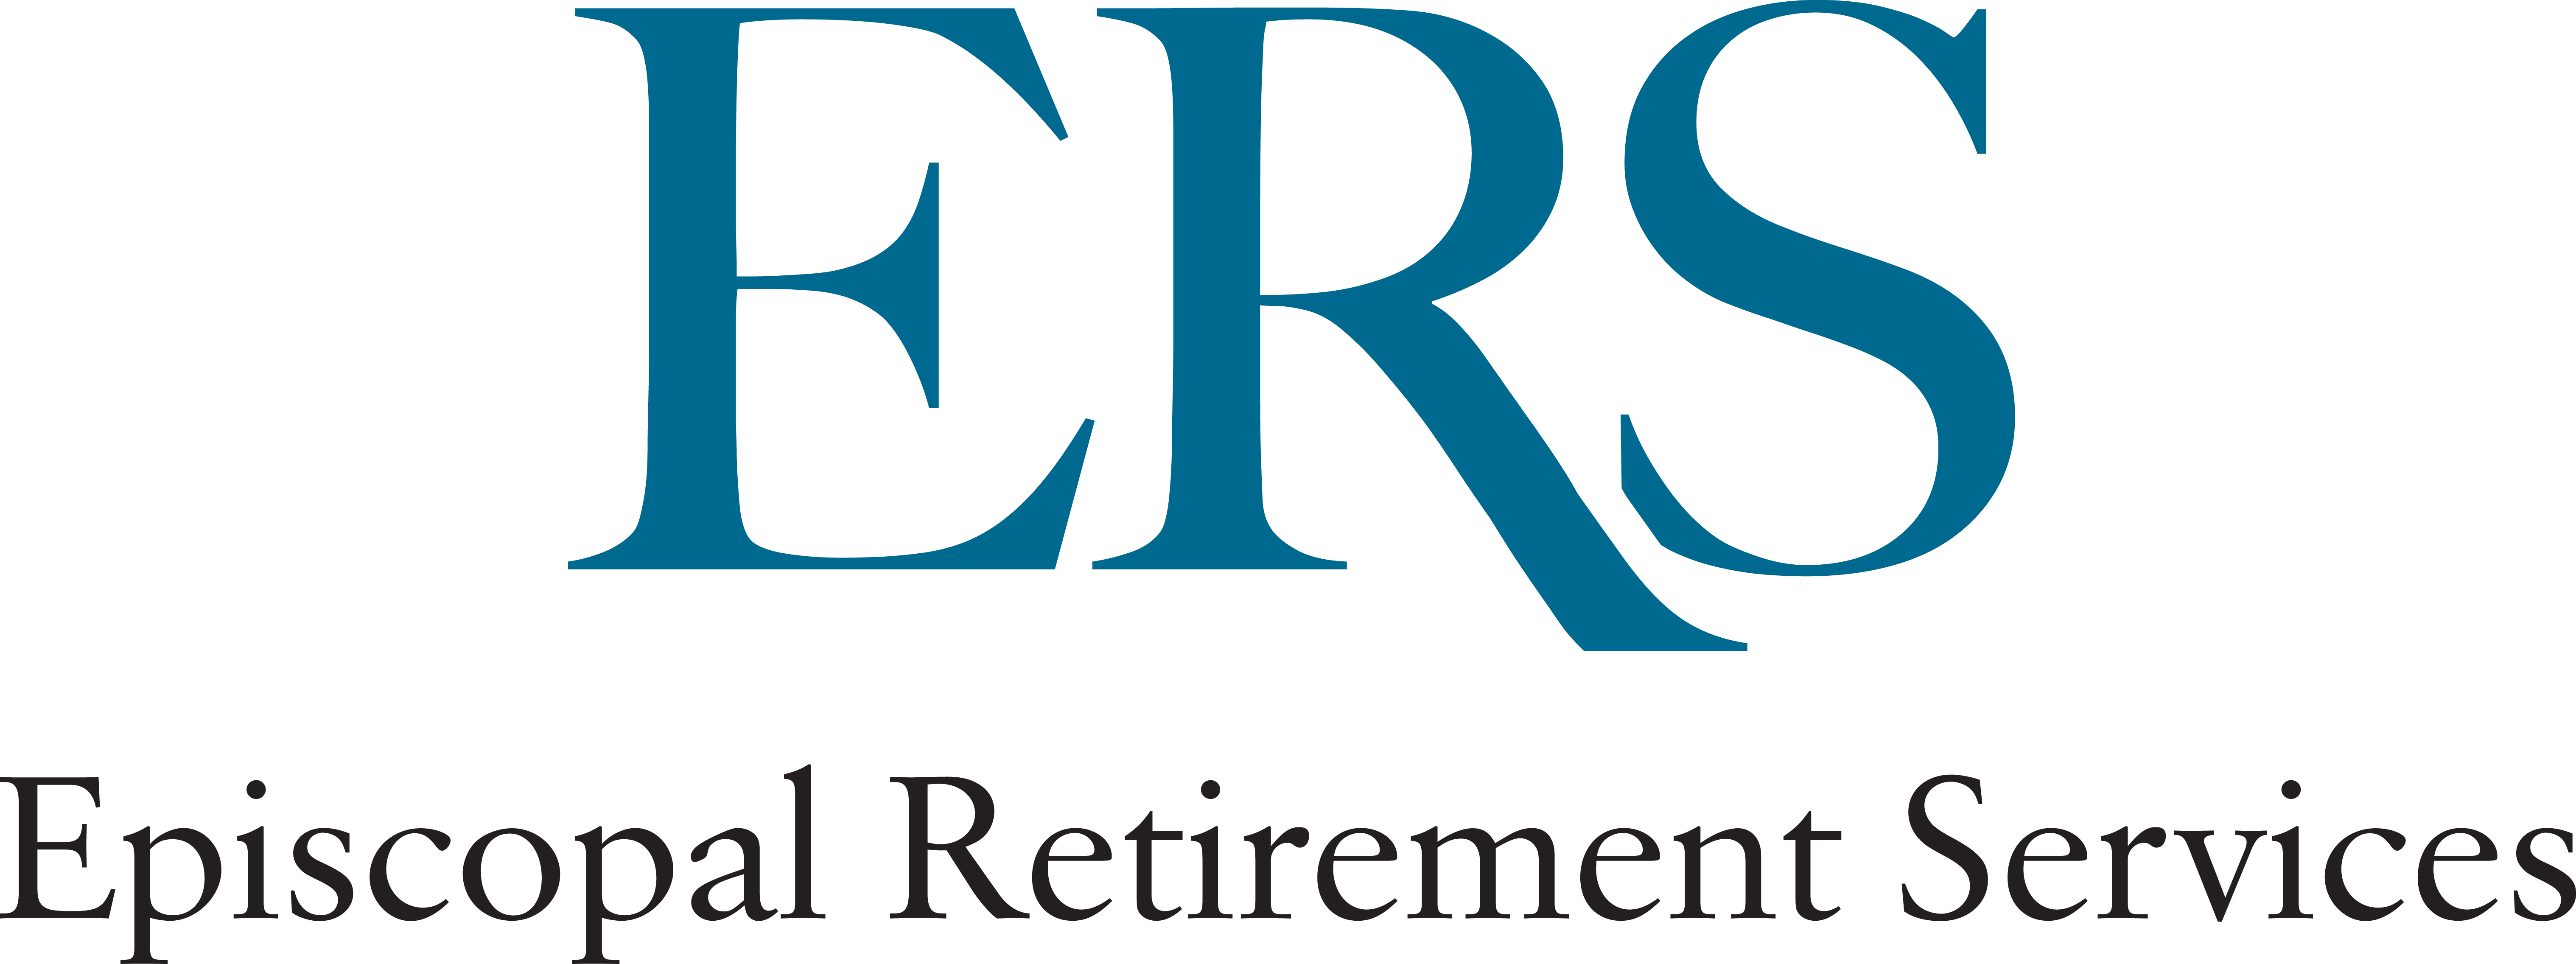 Episcopal Retirement Services, Inc. Company Logo